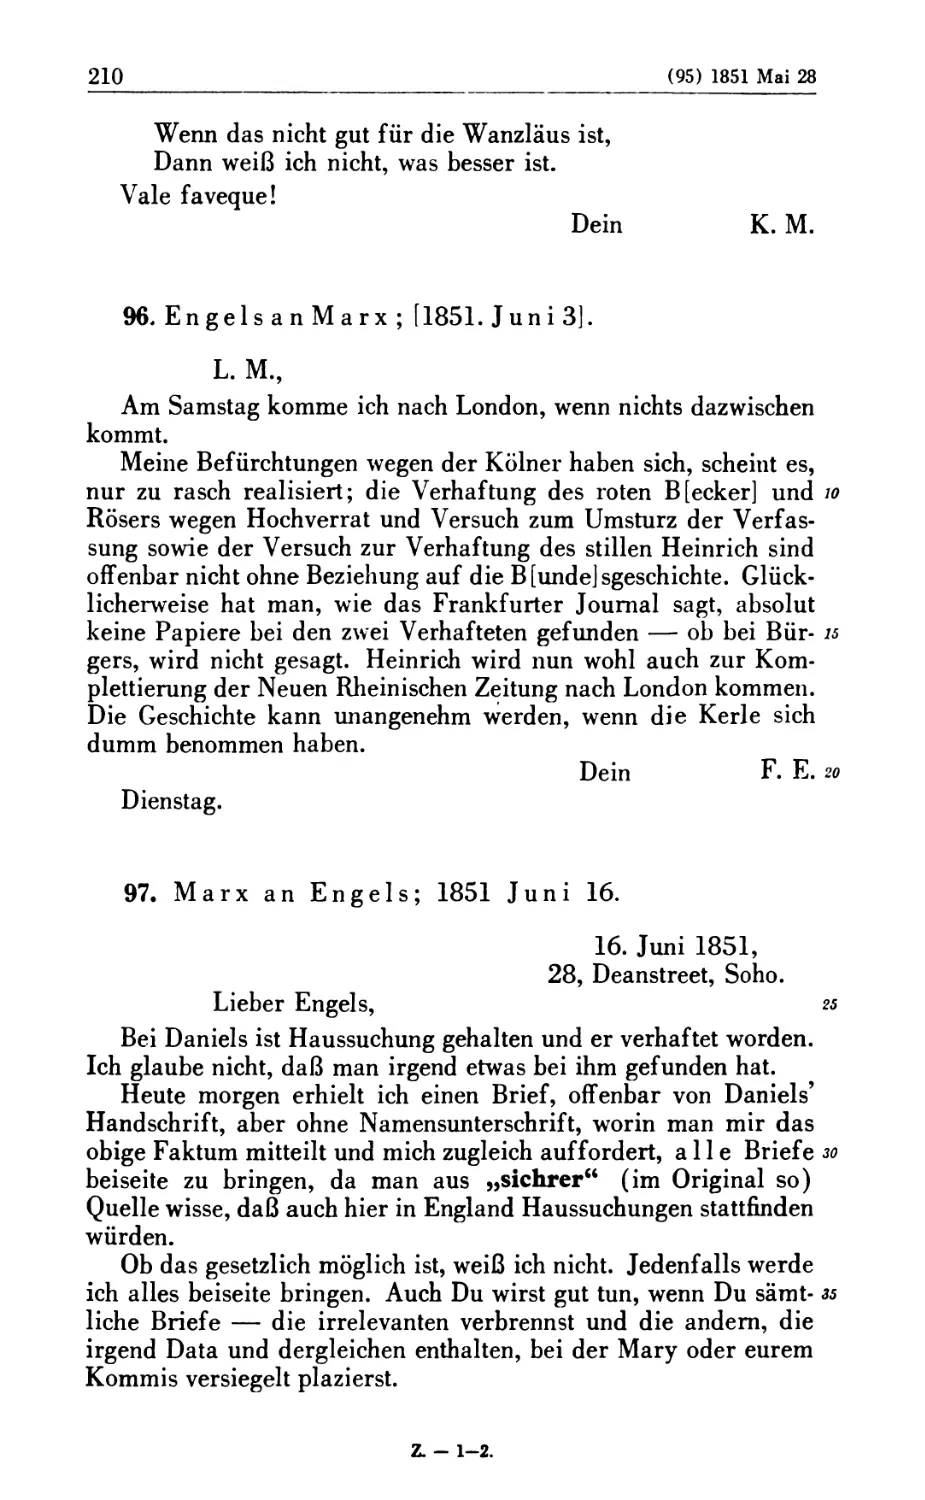 96. Engels an Marx; [1851 Juni 3]
97. Marx an Engels; 1851 Juni 16